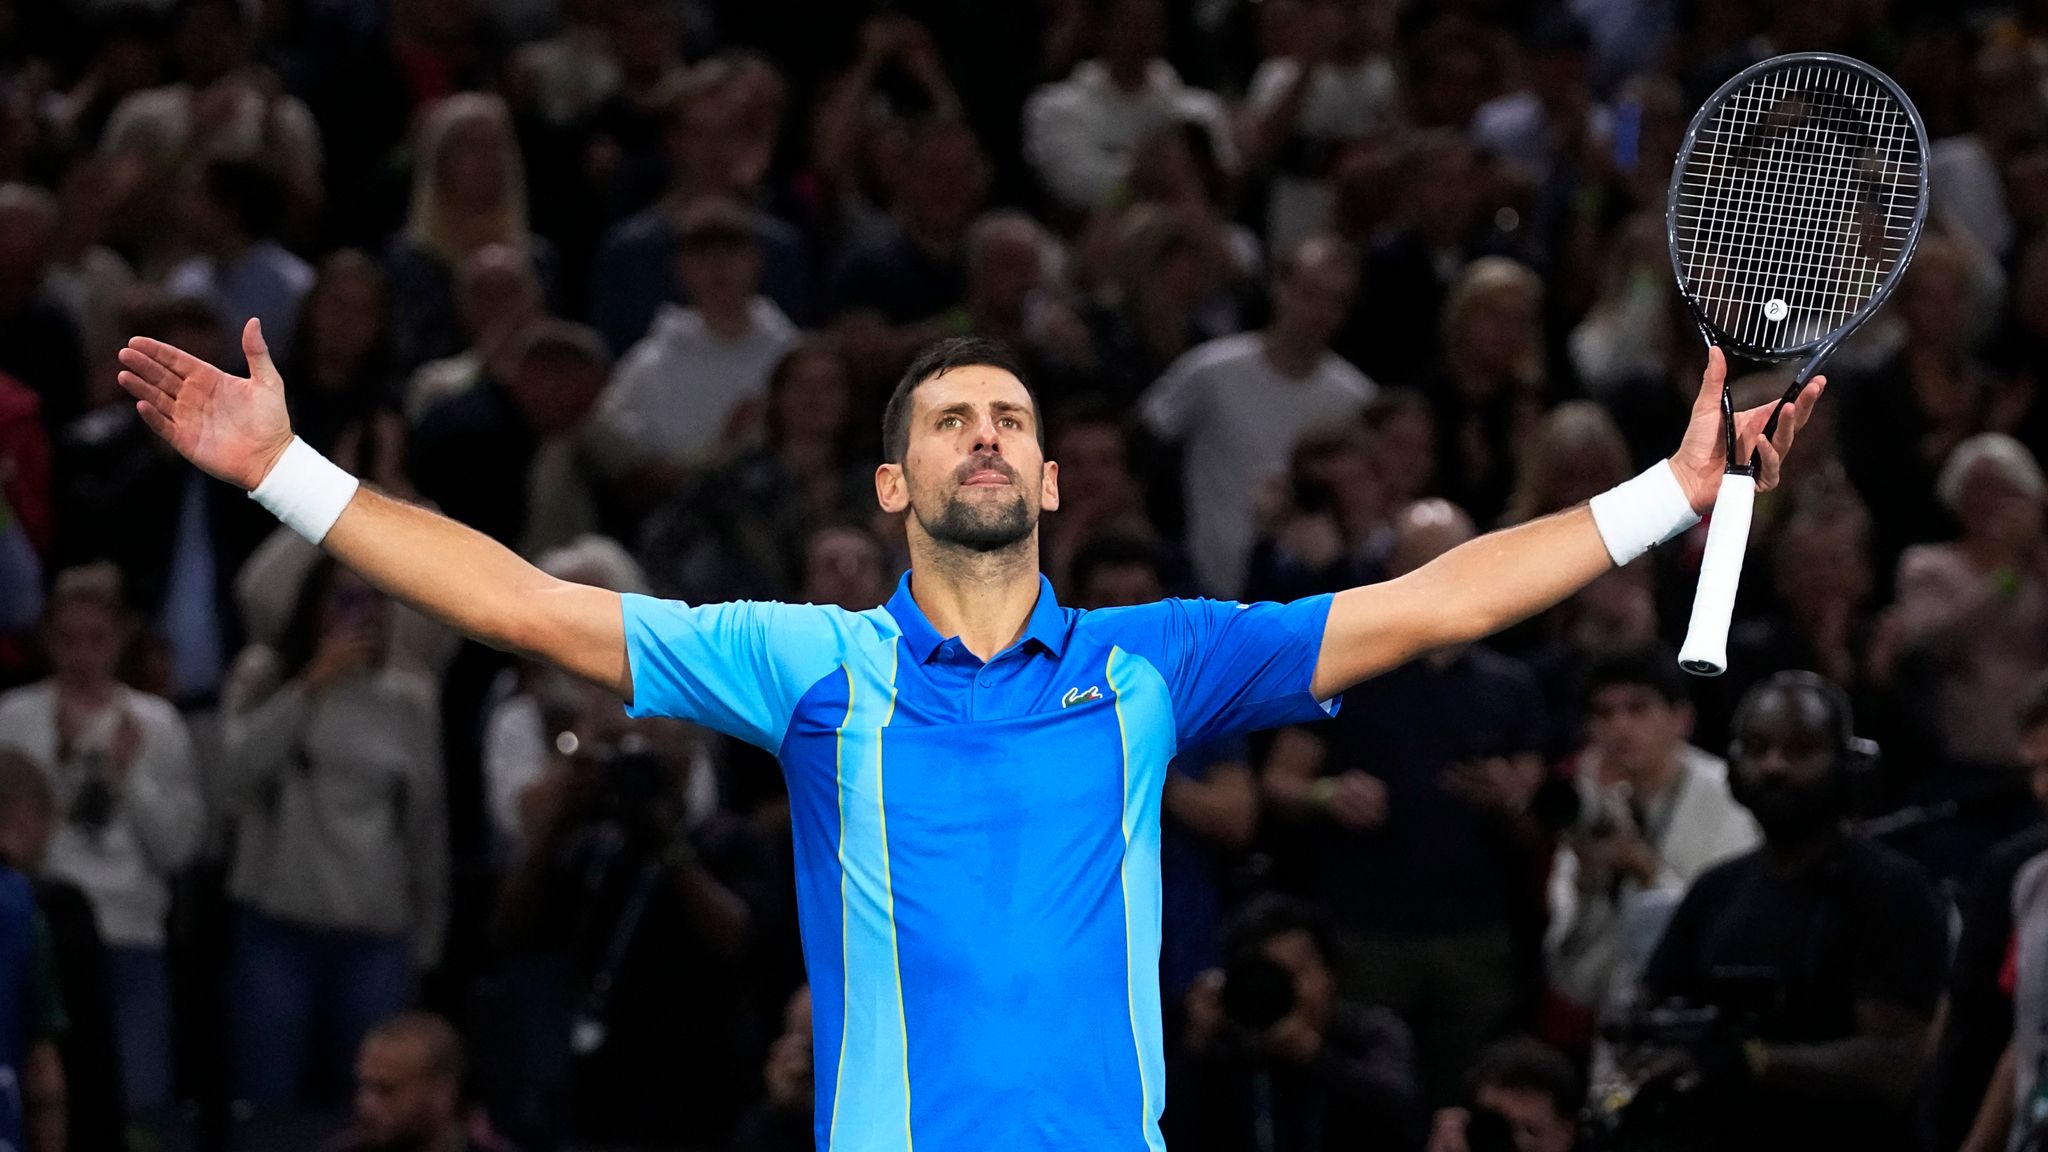 Paris Masters Novak Djokovic and Grigor Dimitrov secure semi-final spot Tennis News Sky Sports